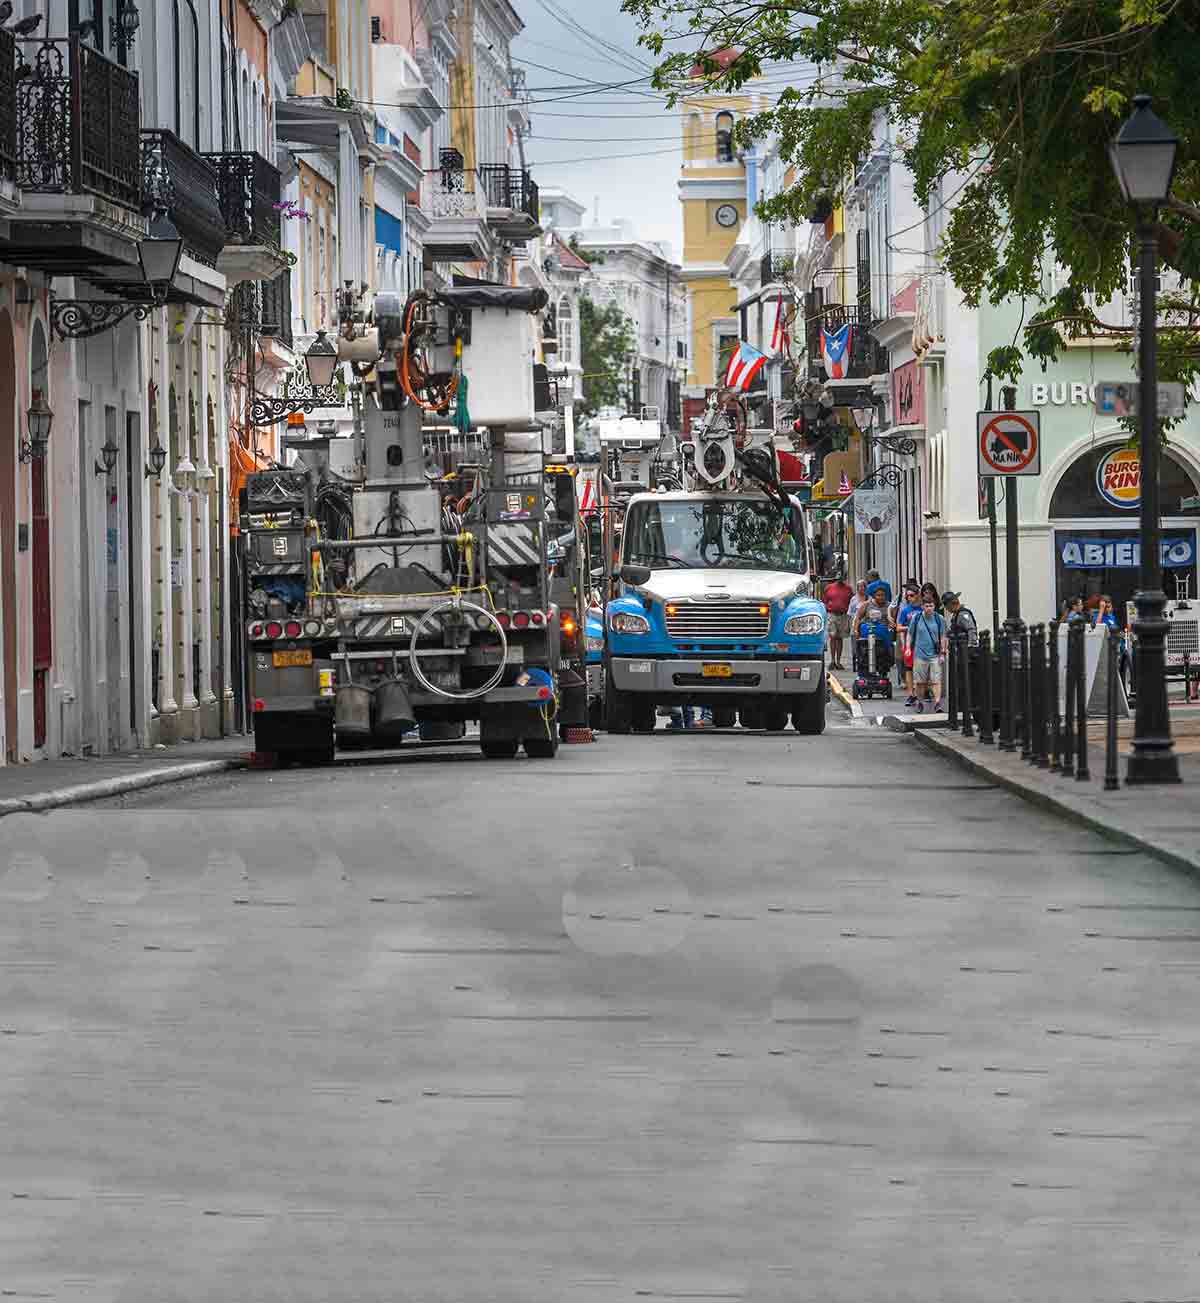 Con Edison bucket trucks parked in a narrow street in a Puerto Rico neighborhood.